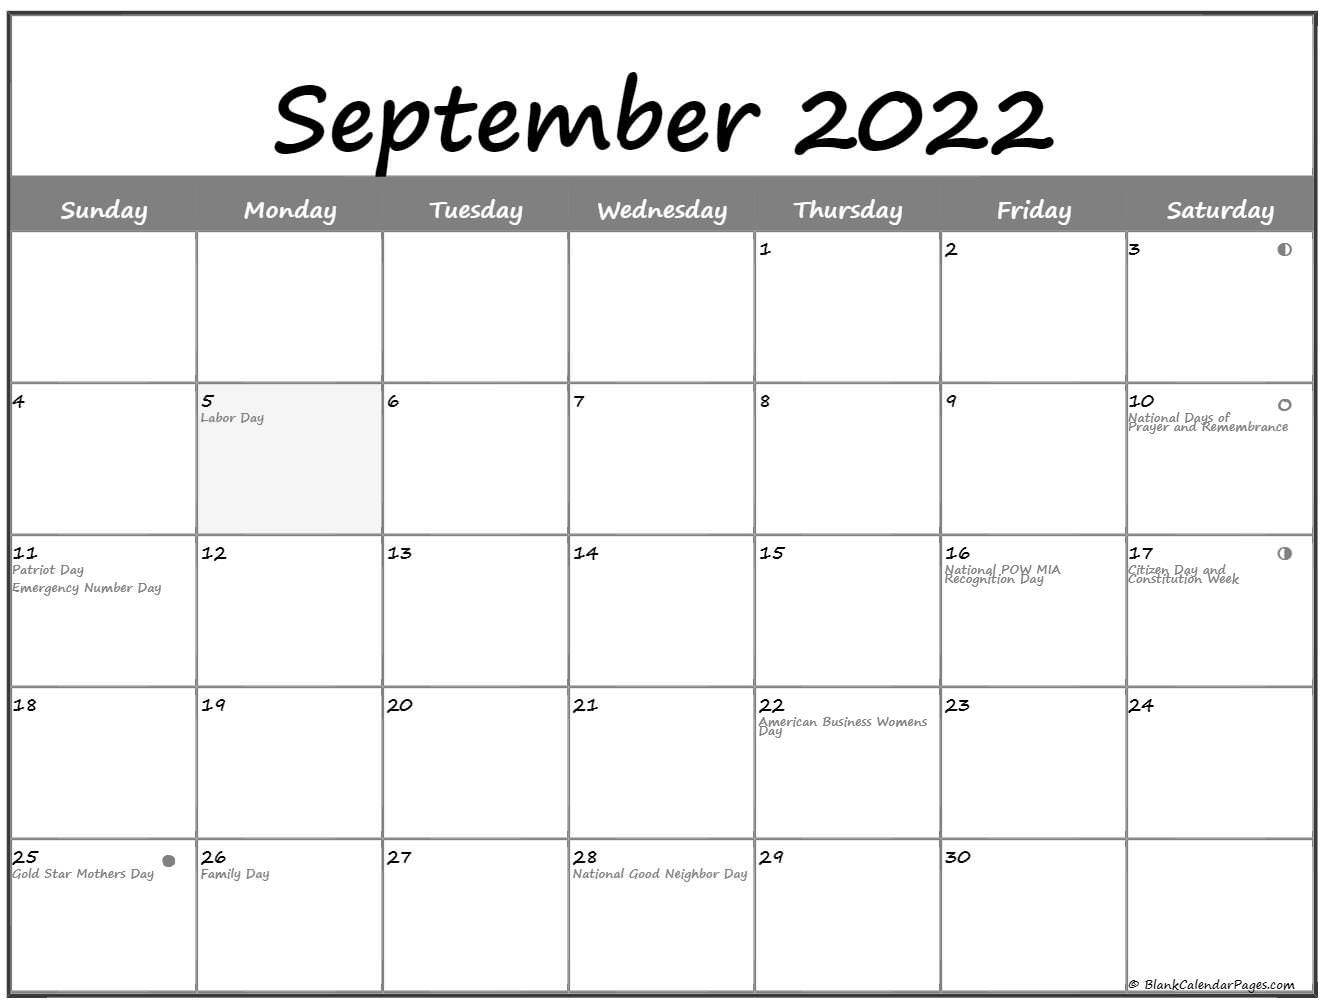 September 2022 Lunar Calendar | Moon Phase Calendar